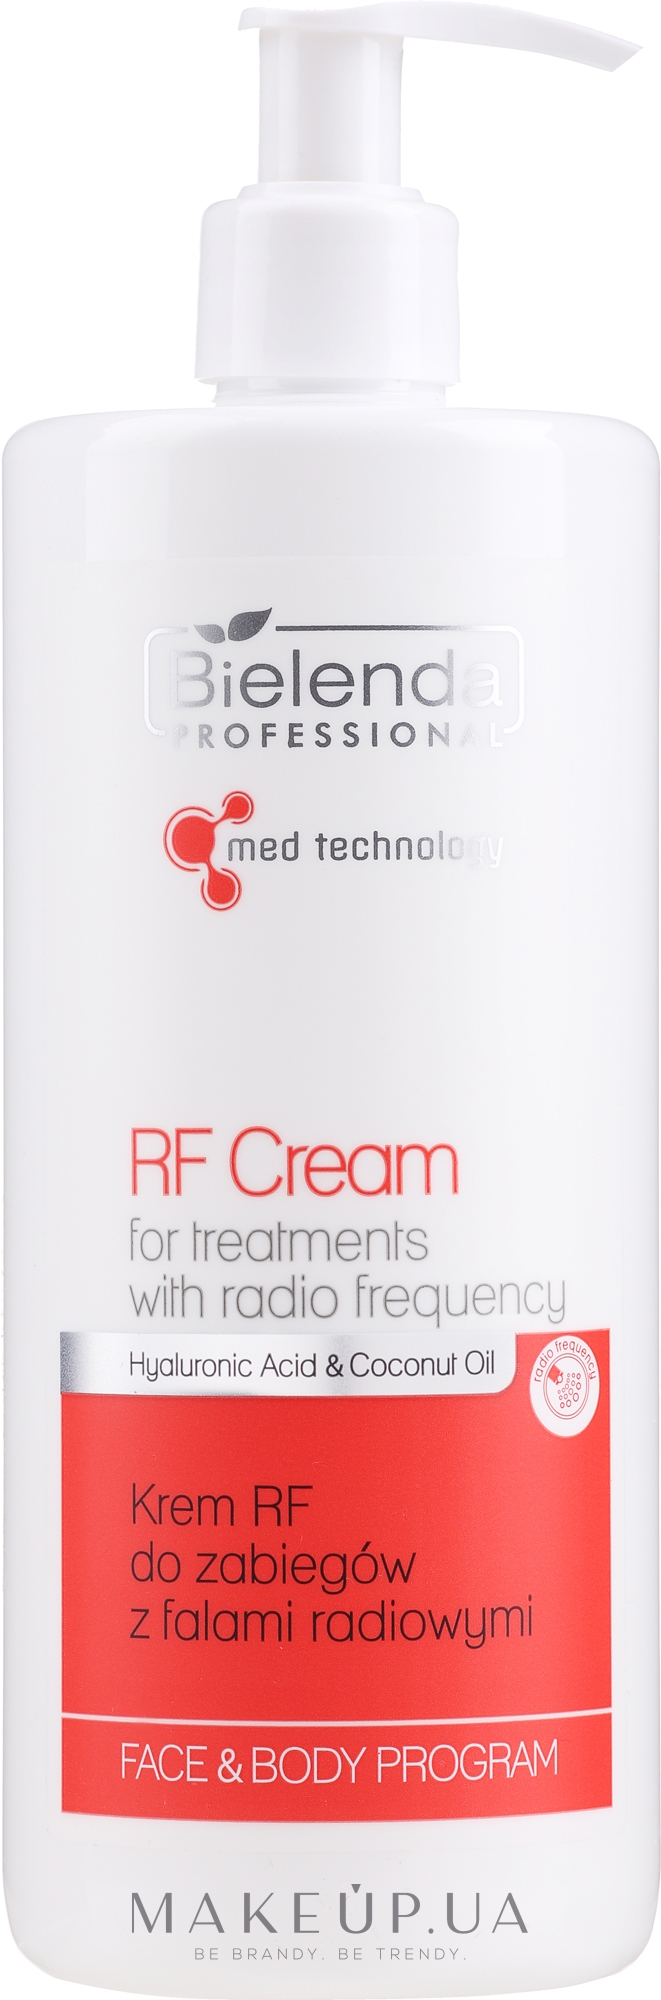 Контактный крем для RF лифтинга - Bielenda Professional Face&Body Program RF Cream For Treatments With Radio Frequency — фото 500ml